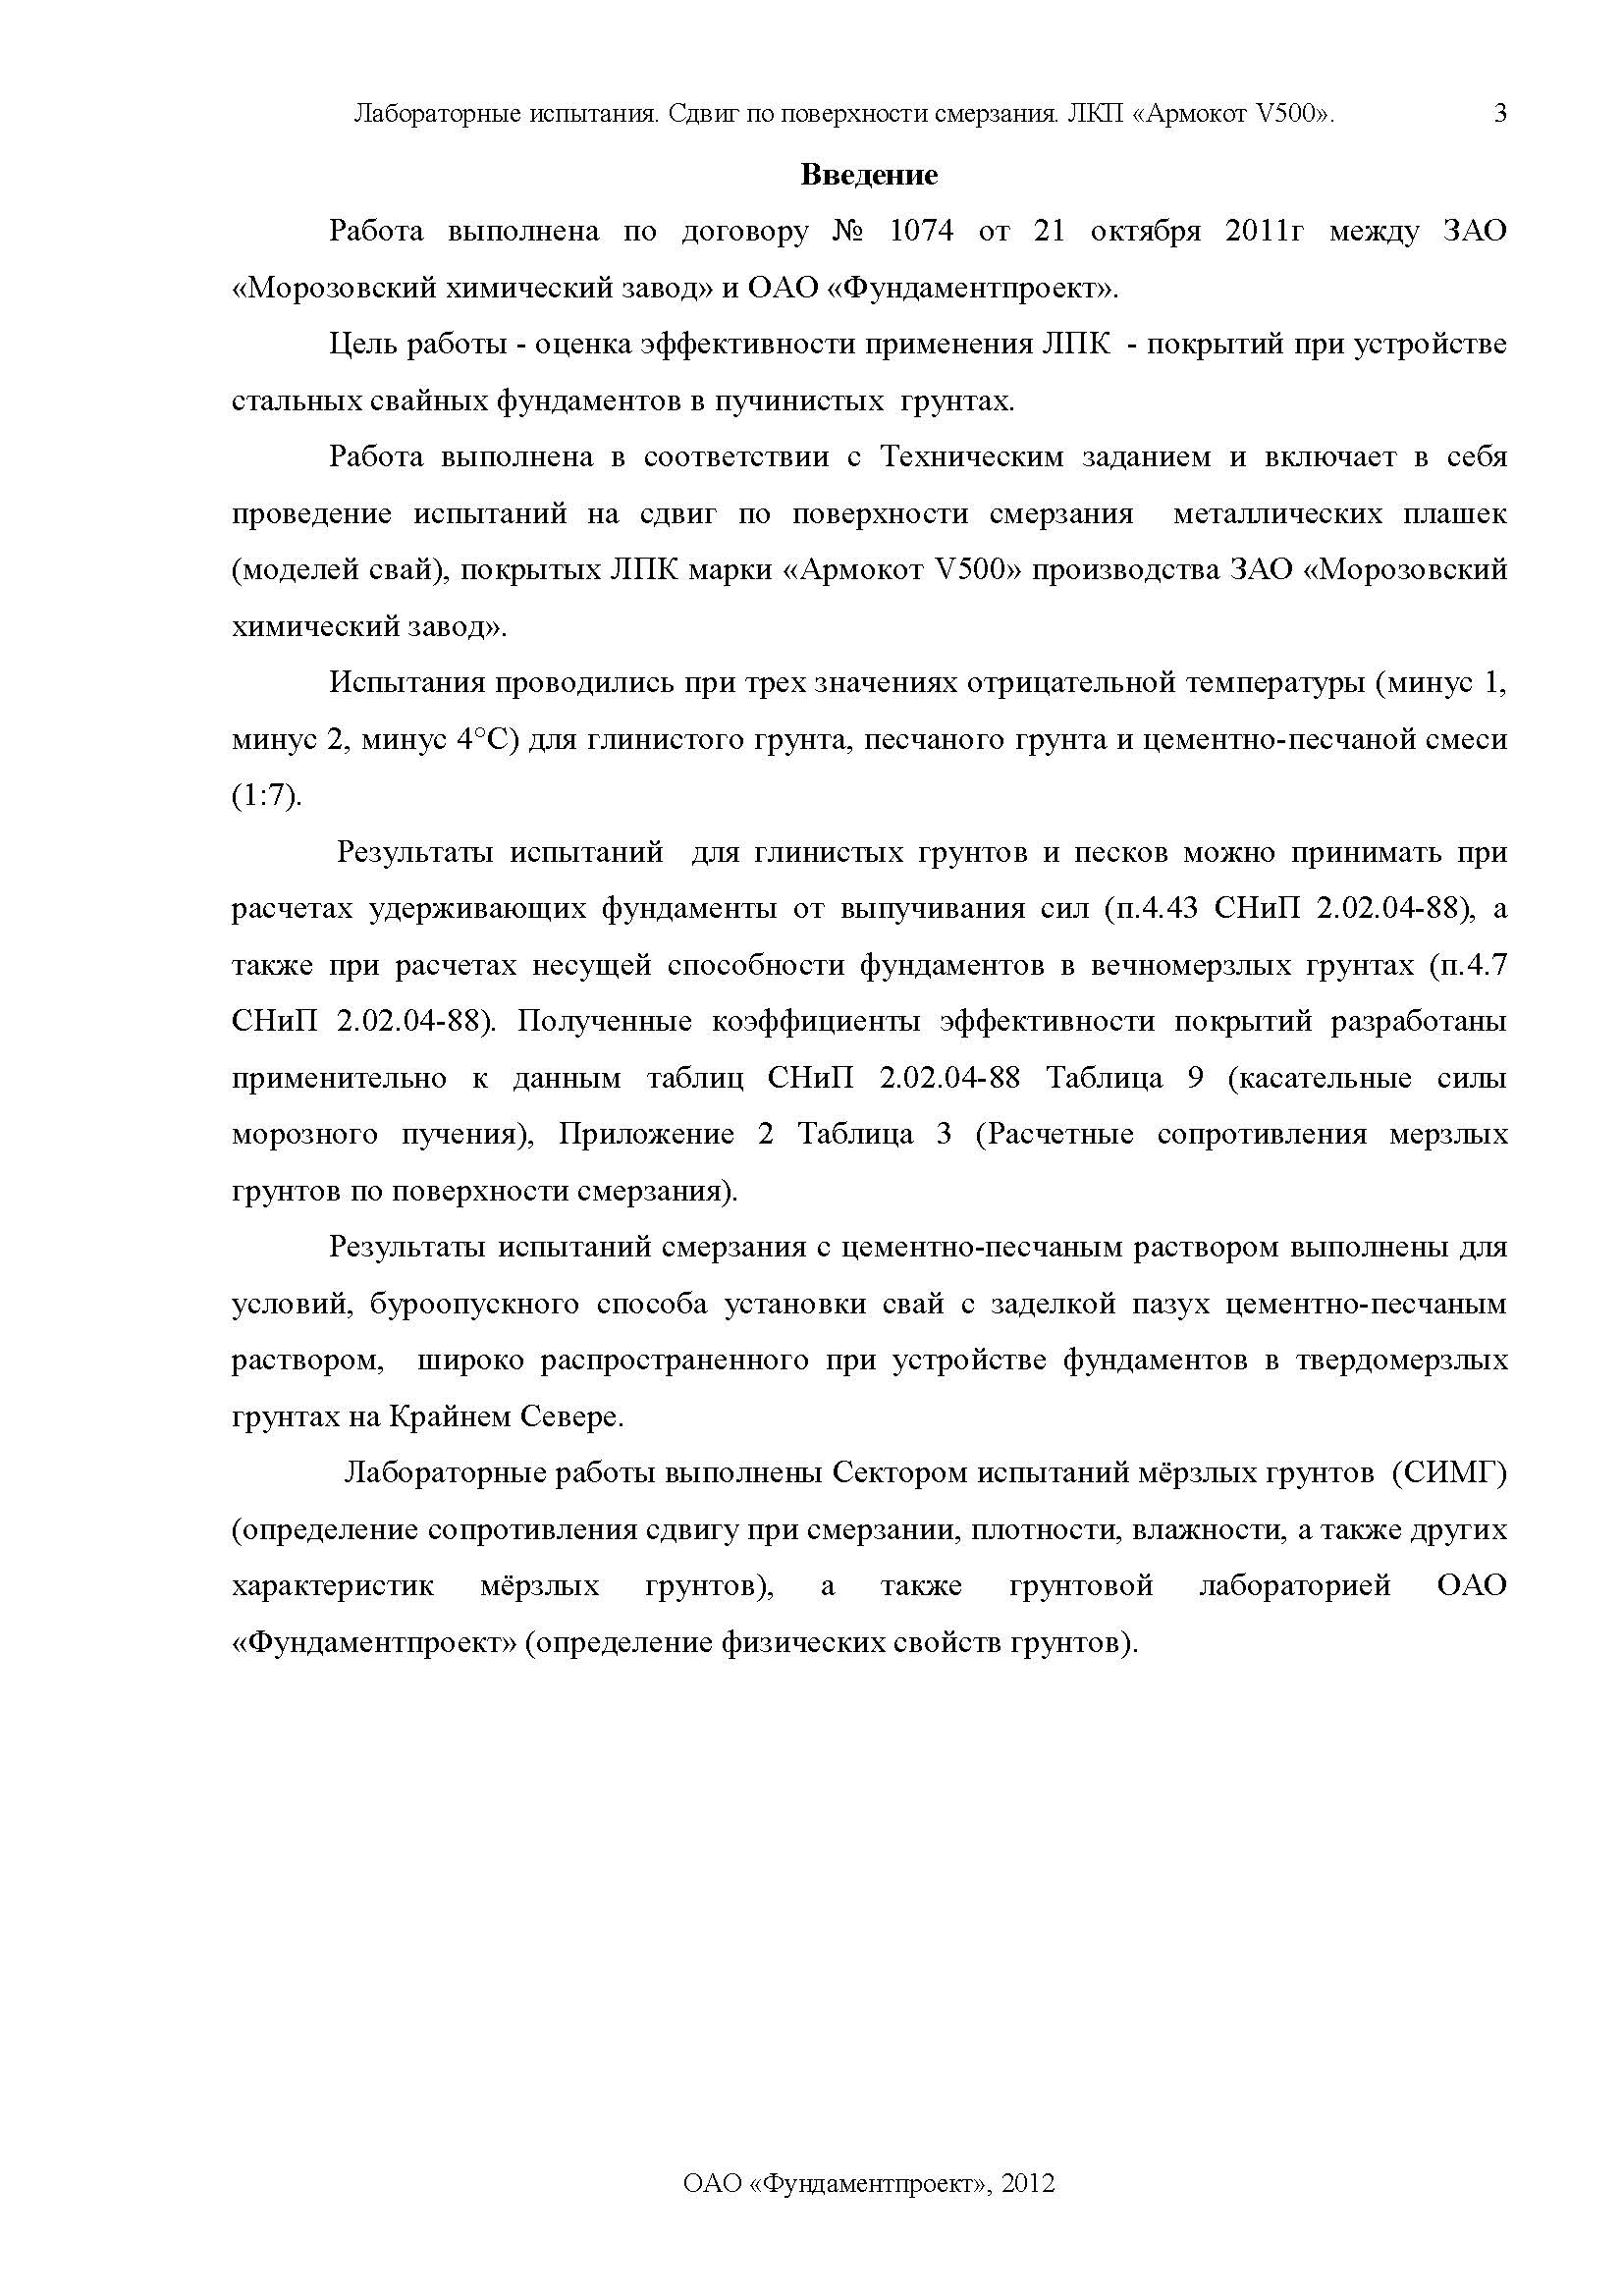 Отчет по сваям Армокот V500 Фундаментпроект_Страница_03